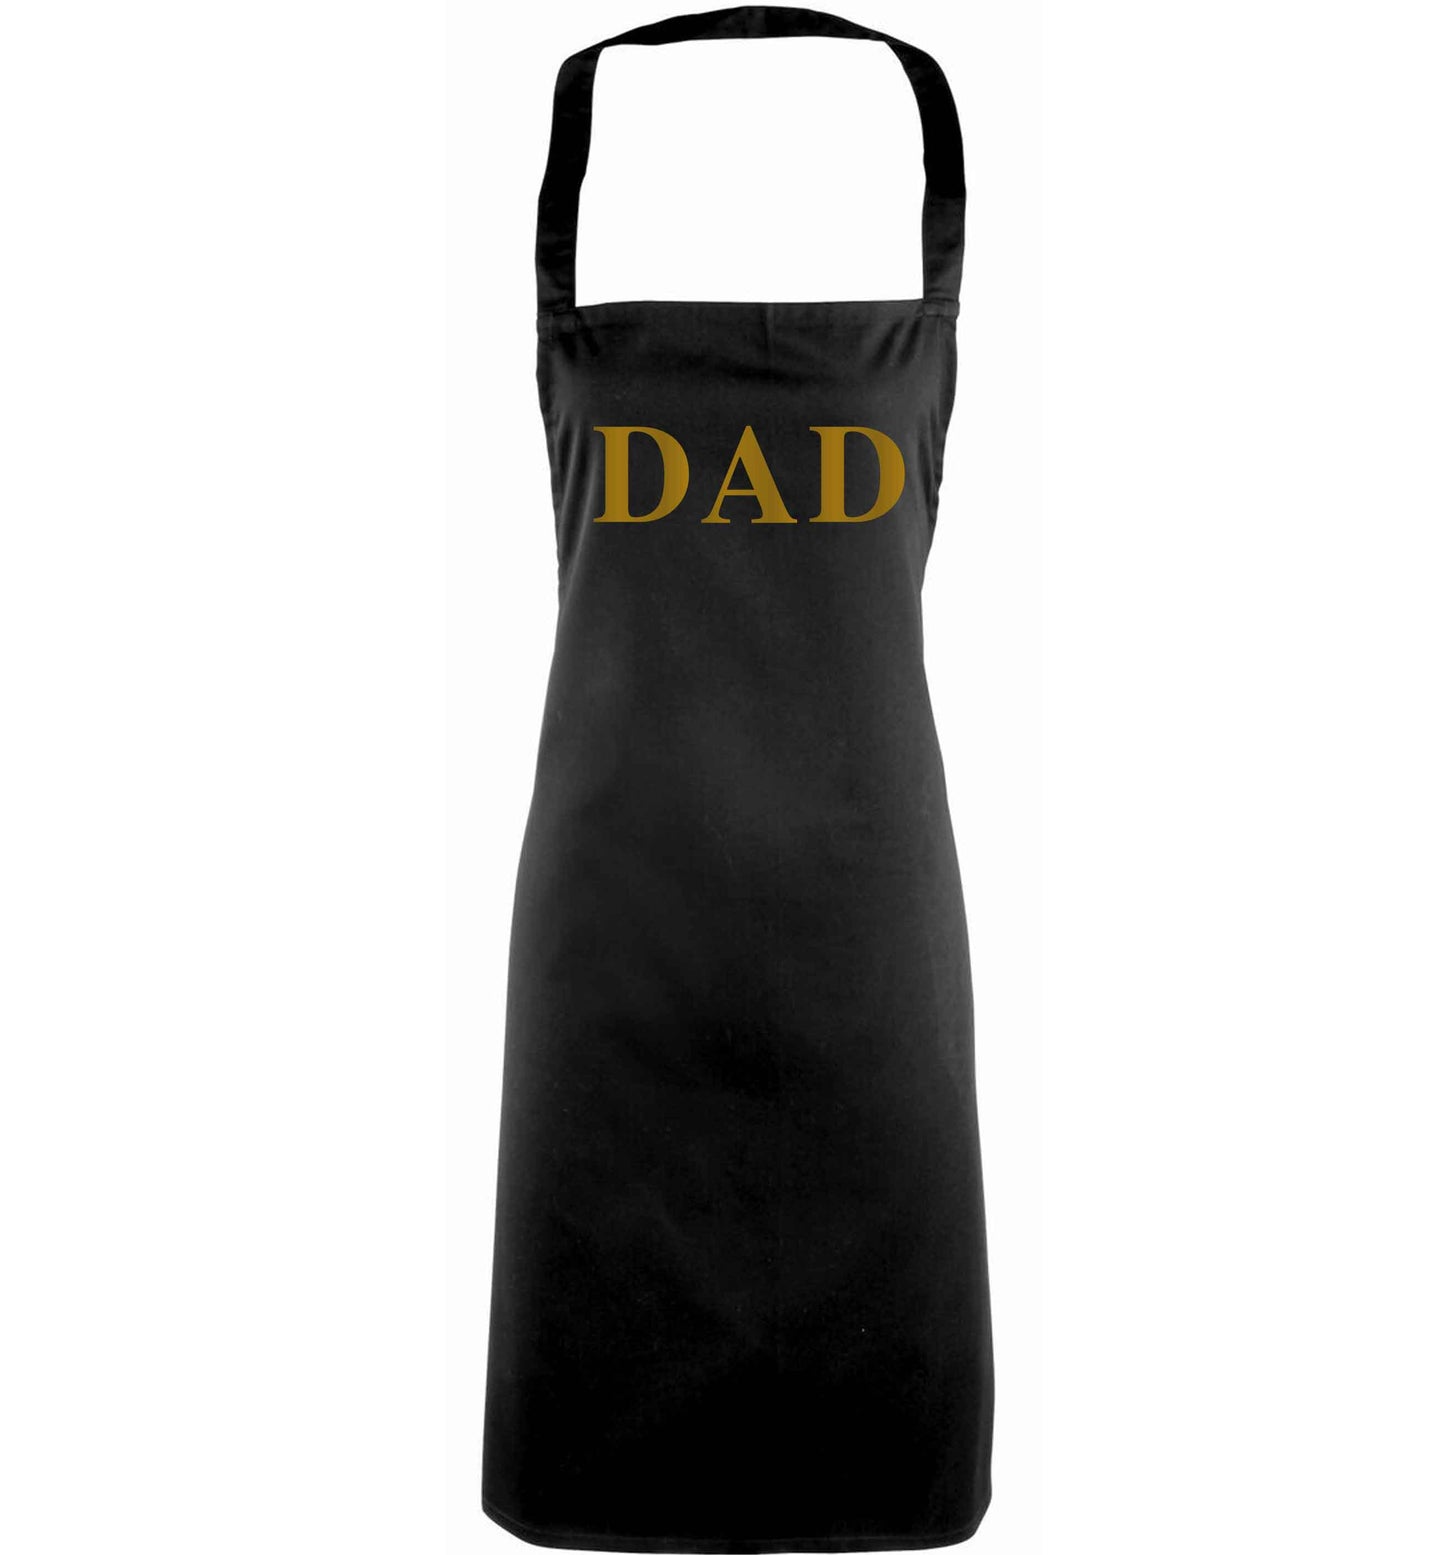 Dad adults black apron